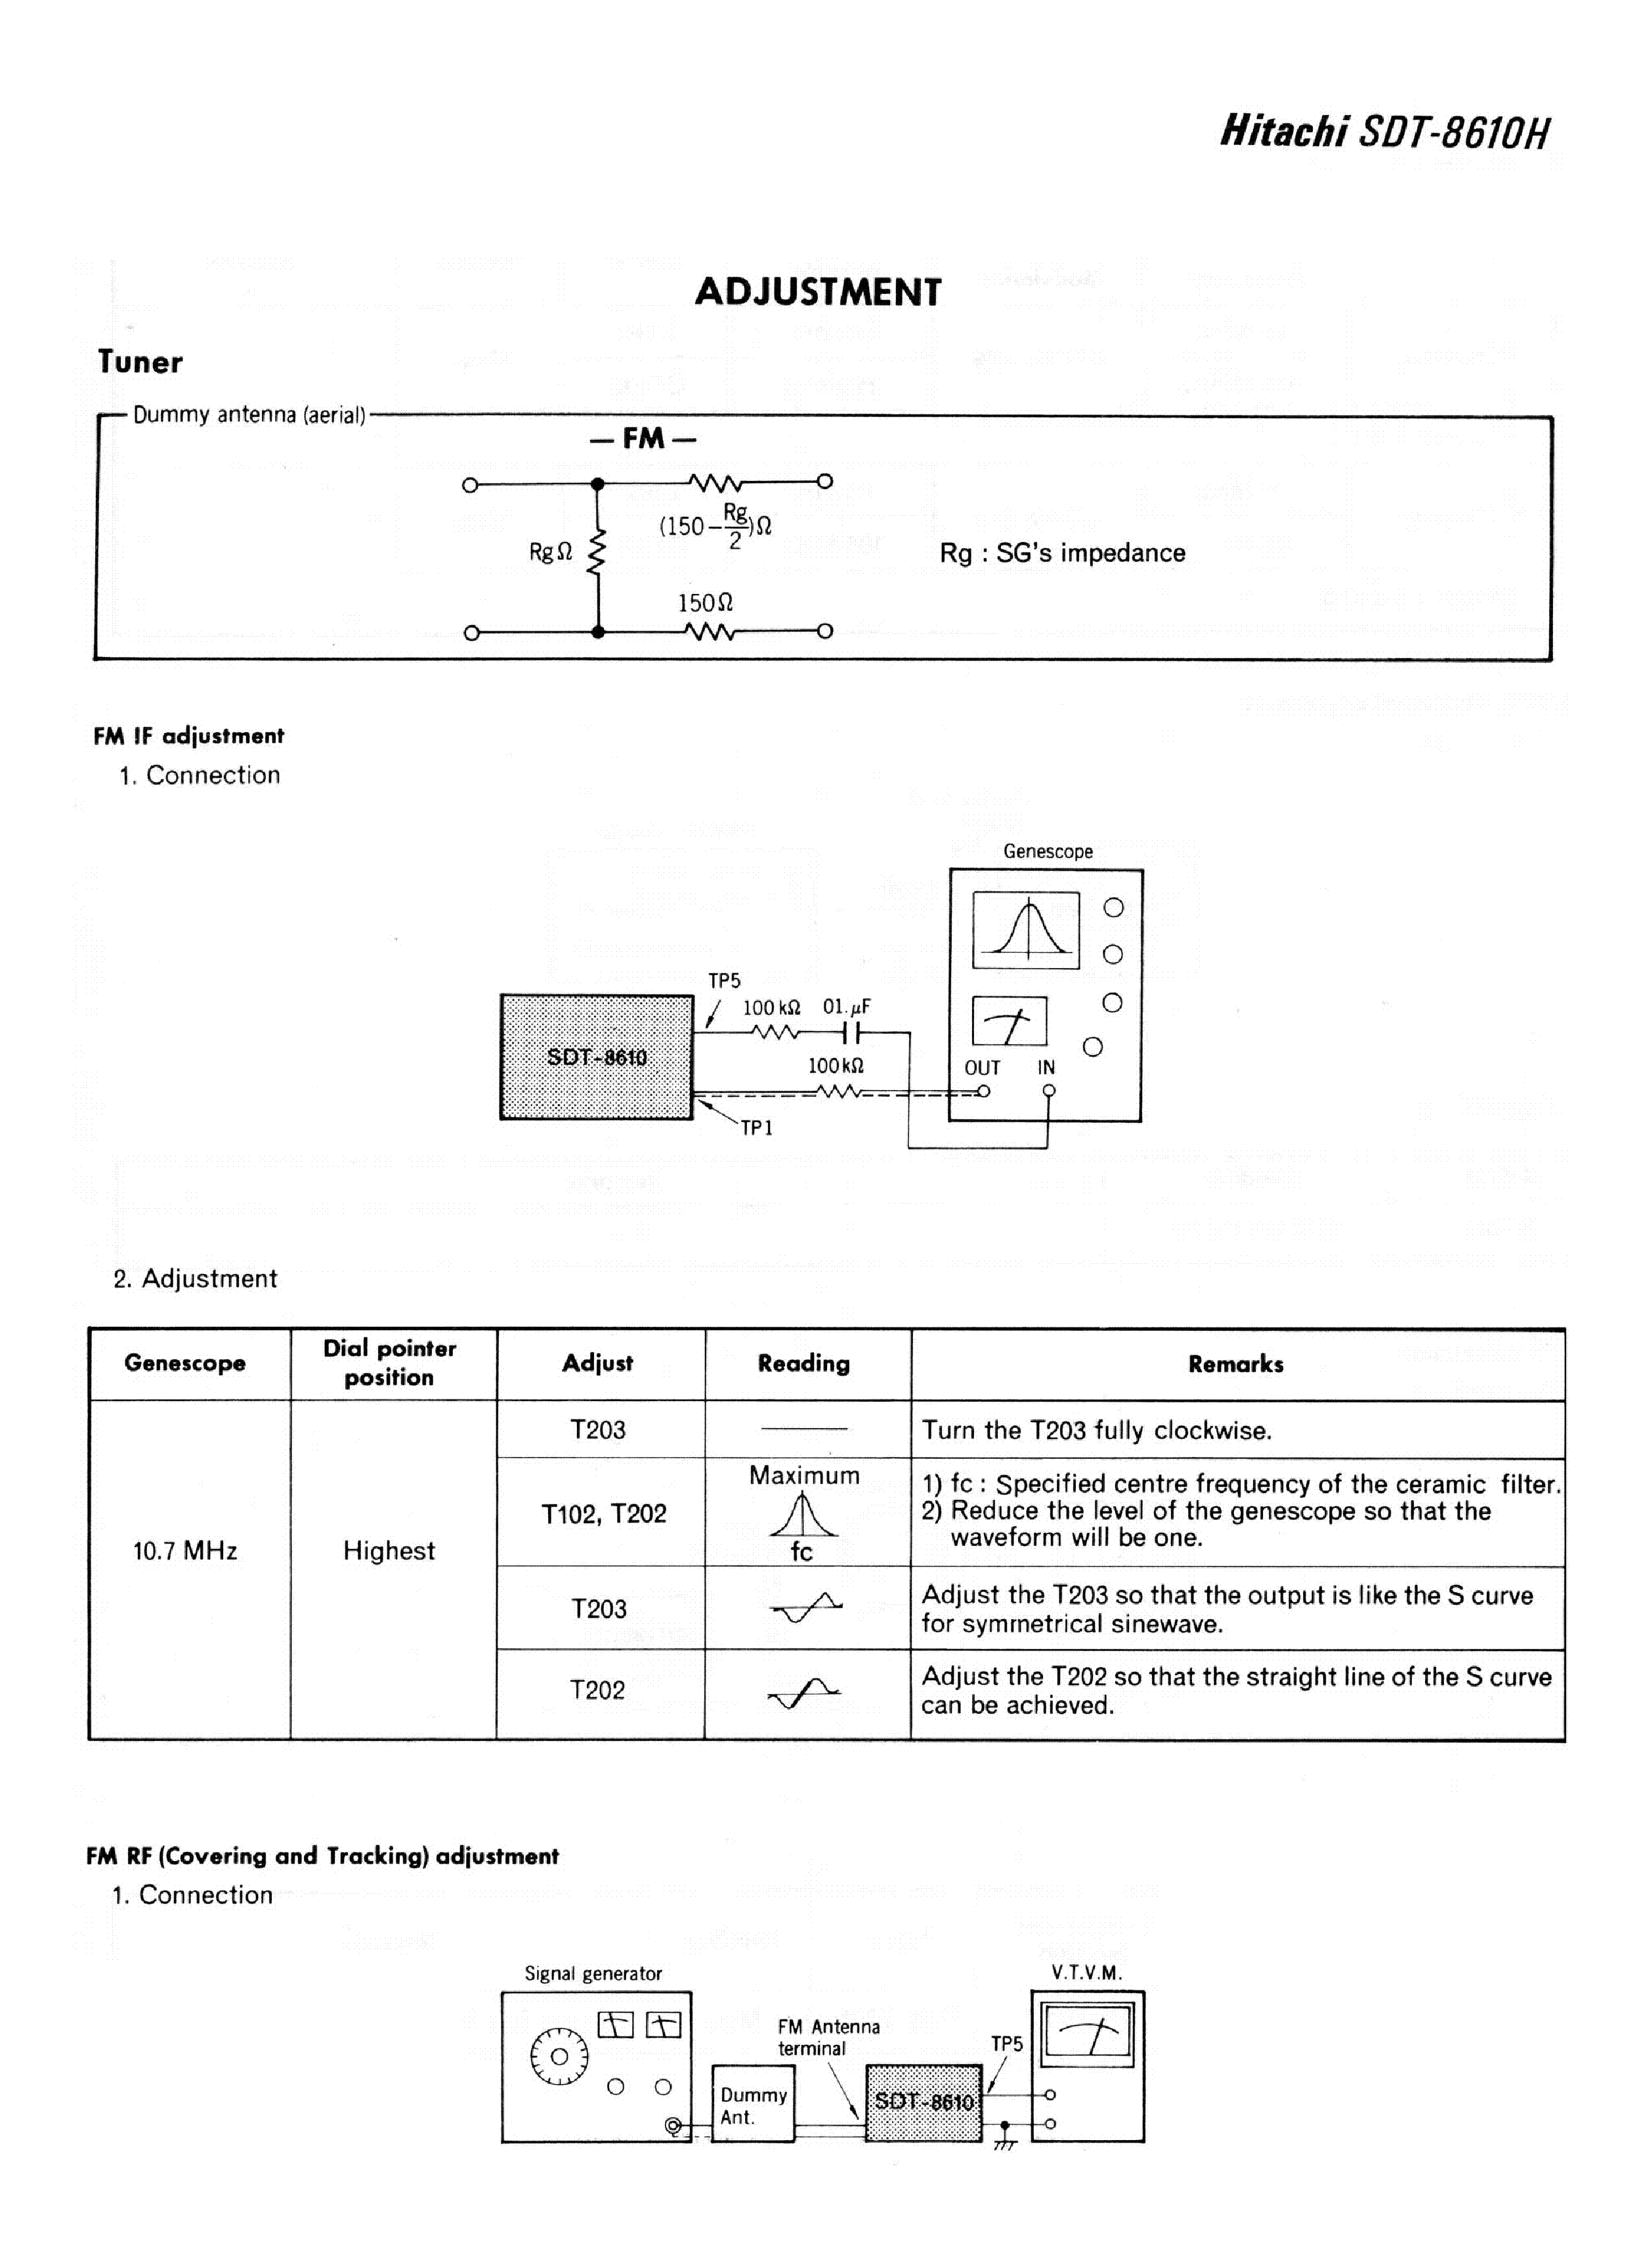 HITACHI SDT-8610H SCH service manual (1st page)